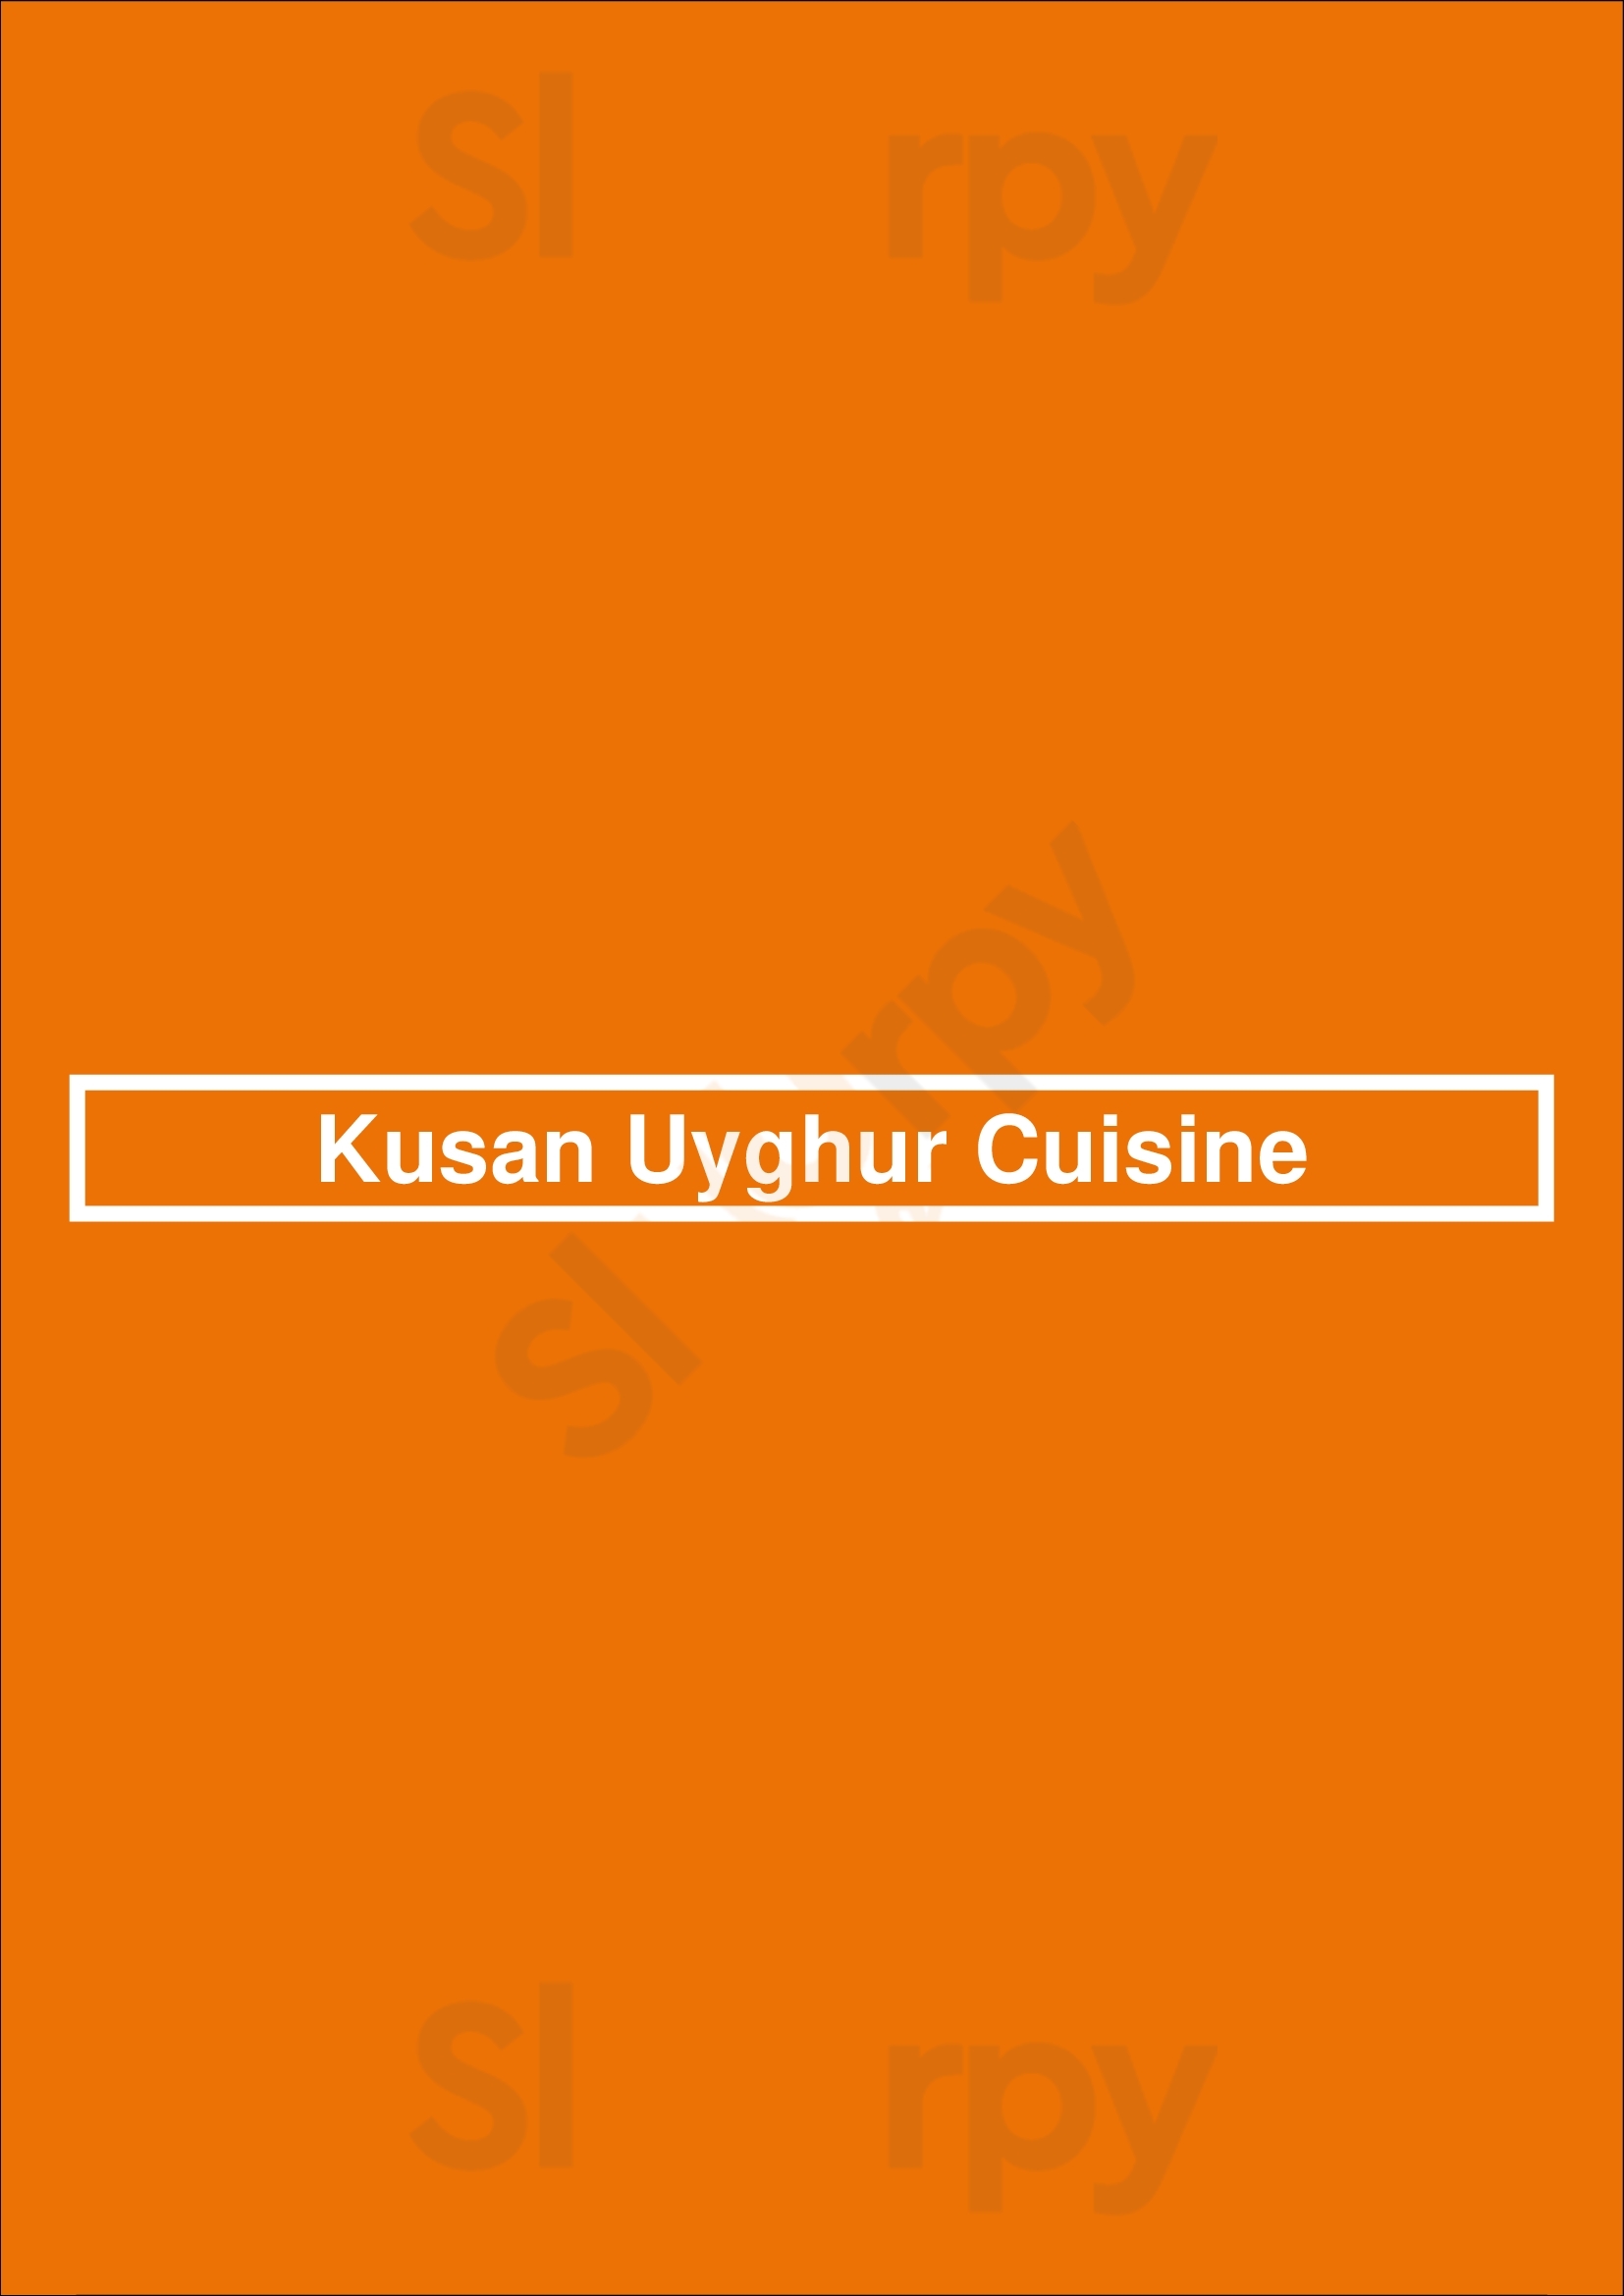 Kusan Uyghur Cuisine San Jose Menu - 1